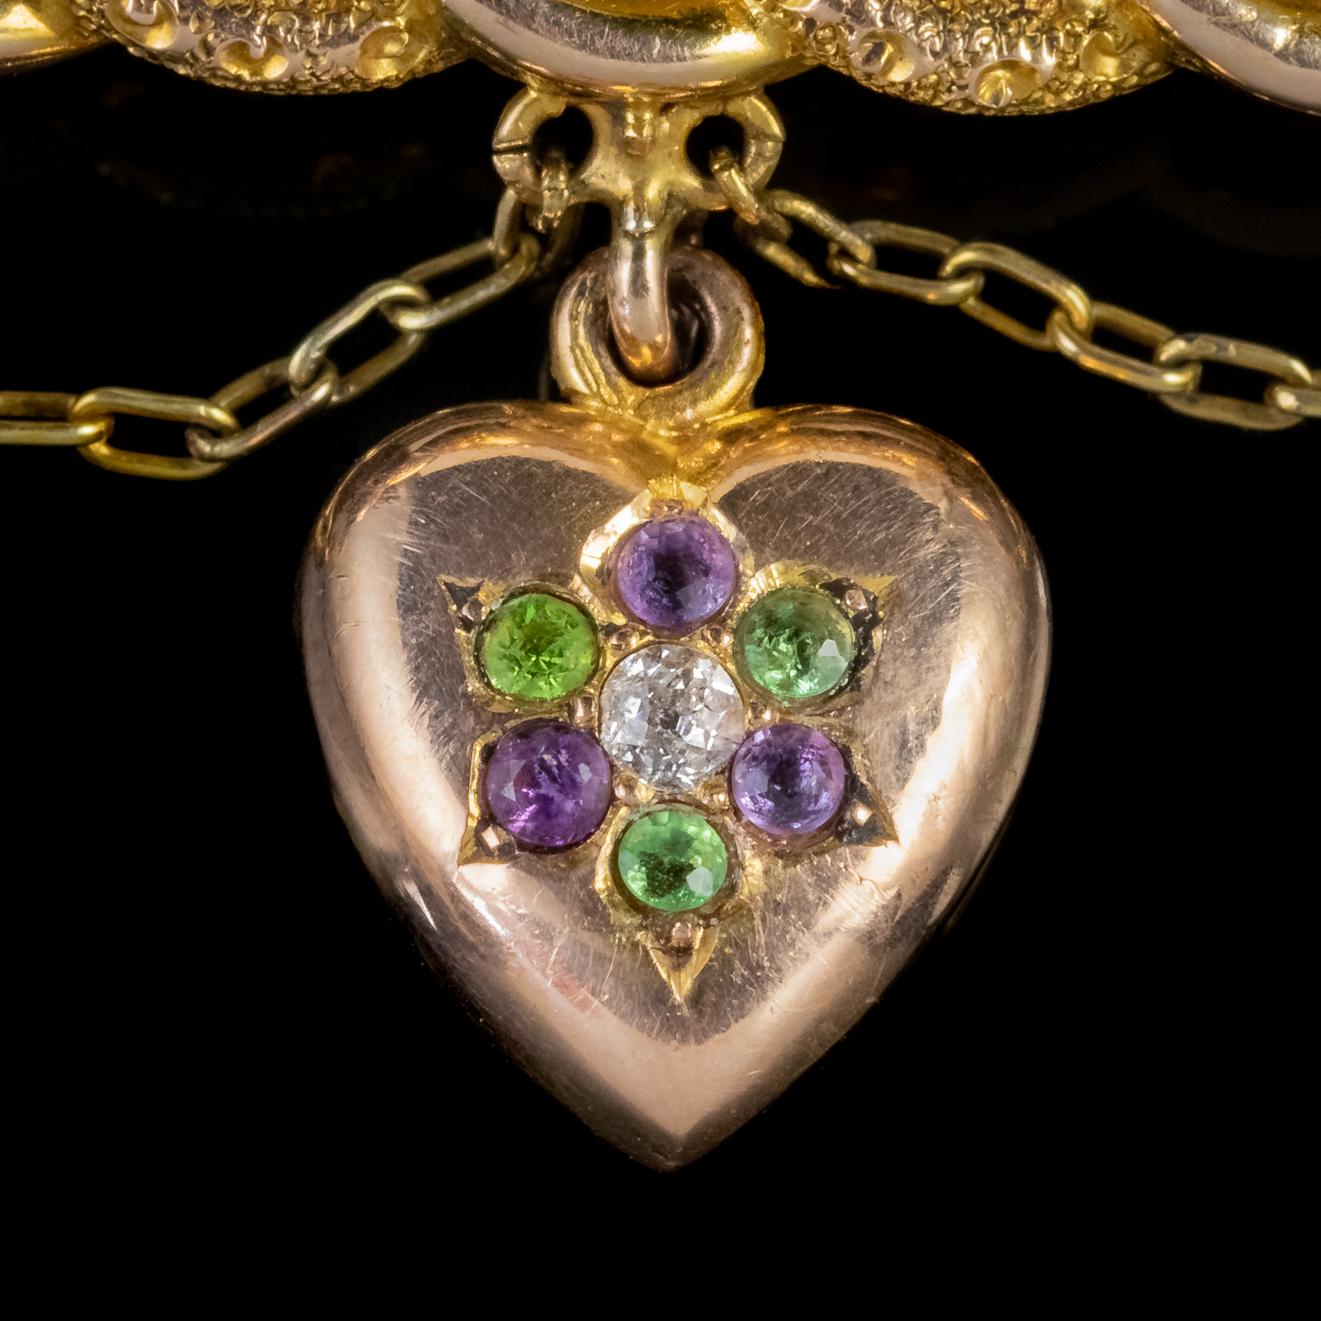 Antique Edwardian Suffragette Heart Brooch 15 Carat Gold, circa 1910 1